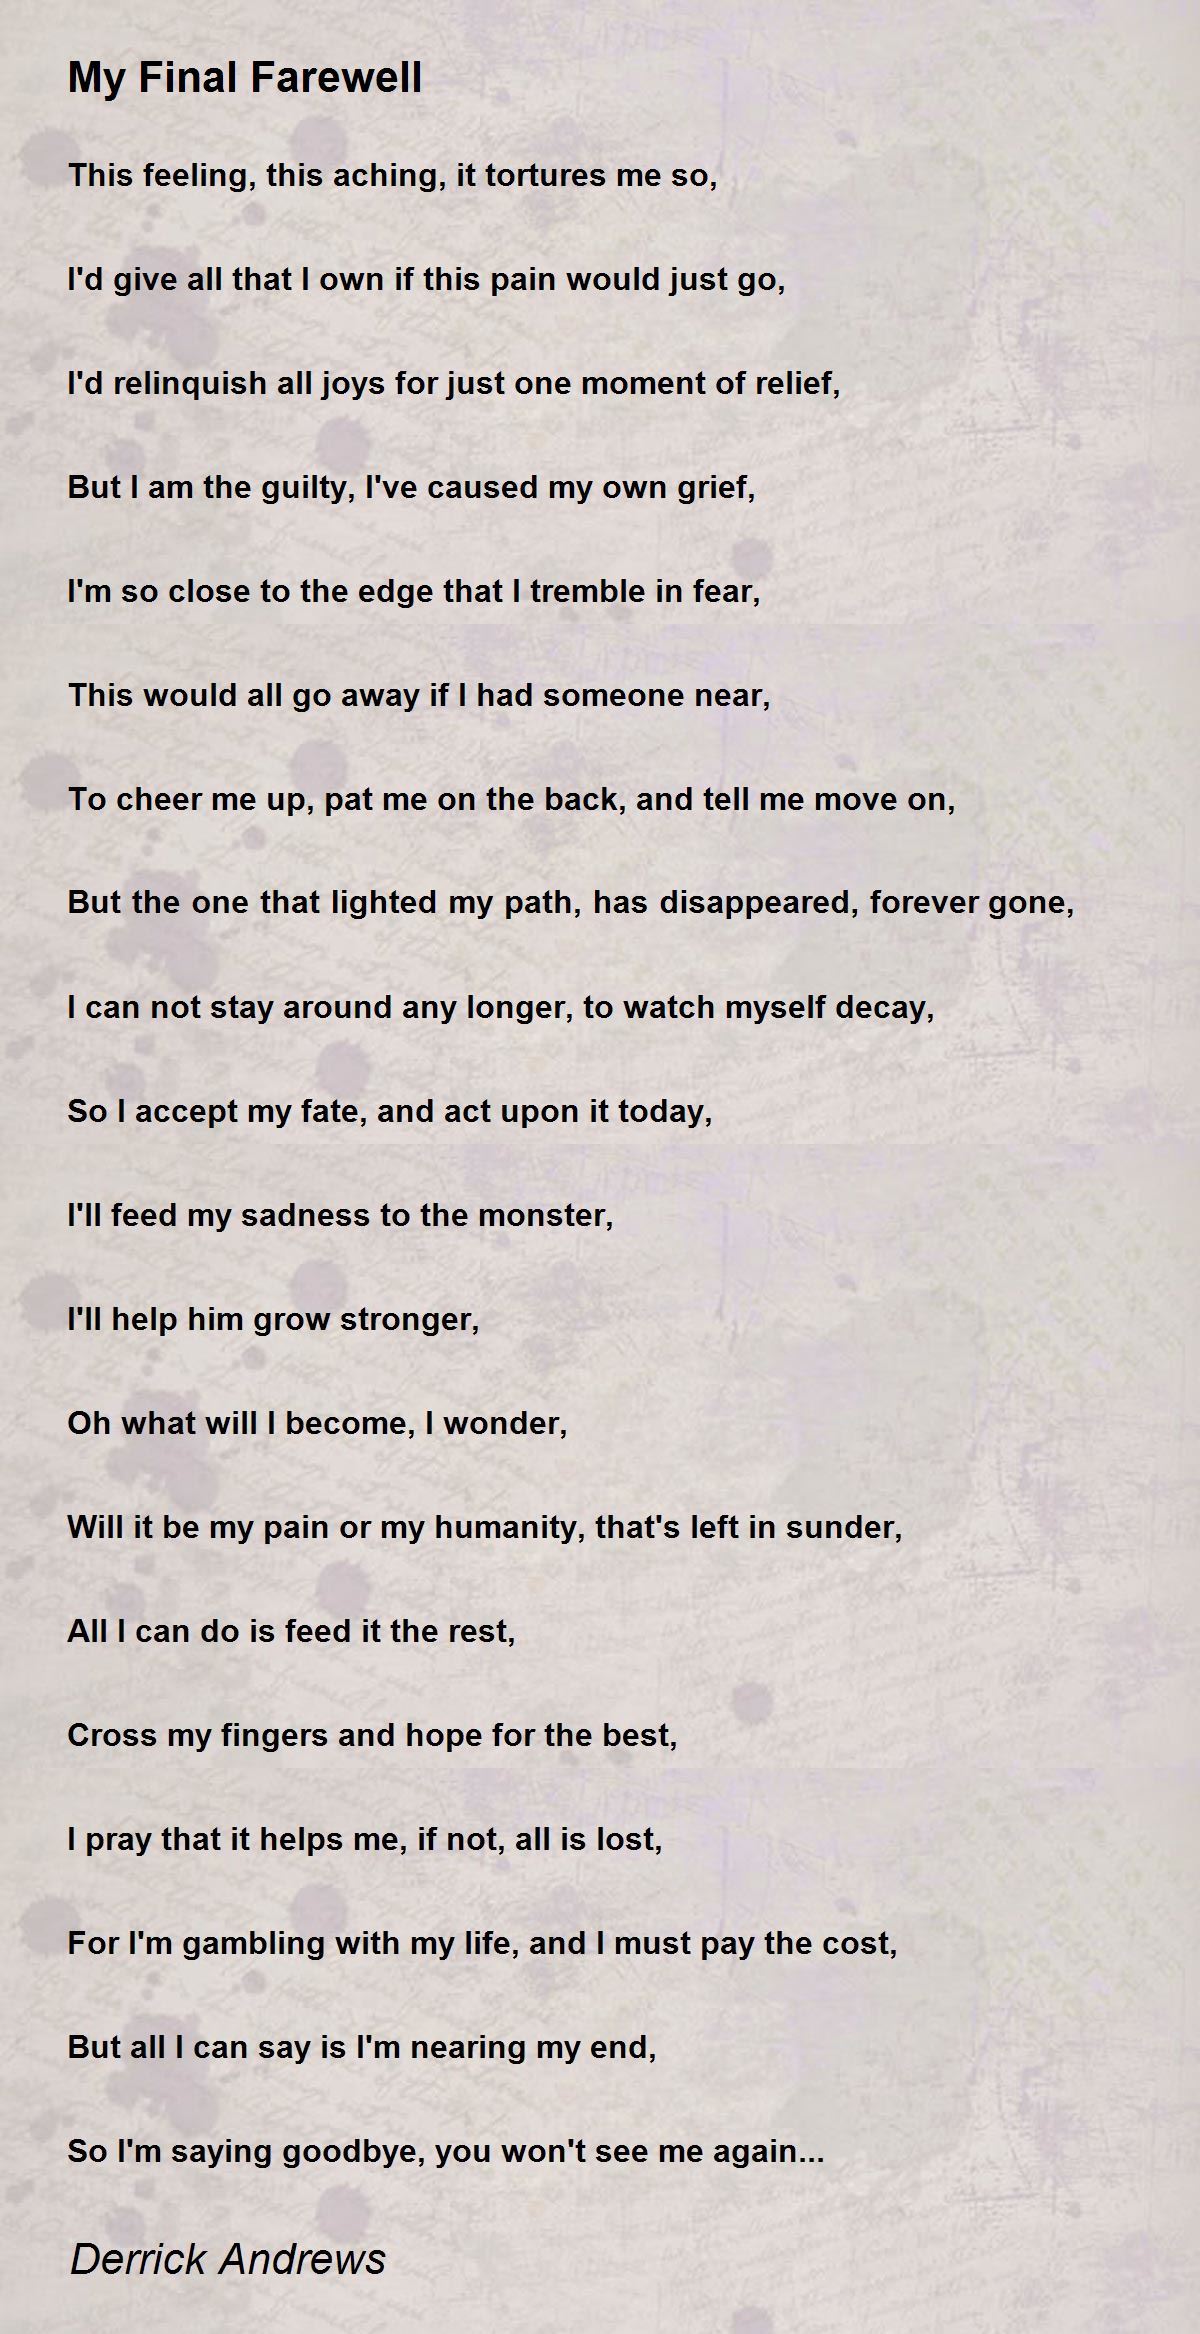 My Final Farewell Poem by Derrick Andrews - Poem Hunter